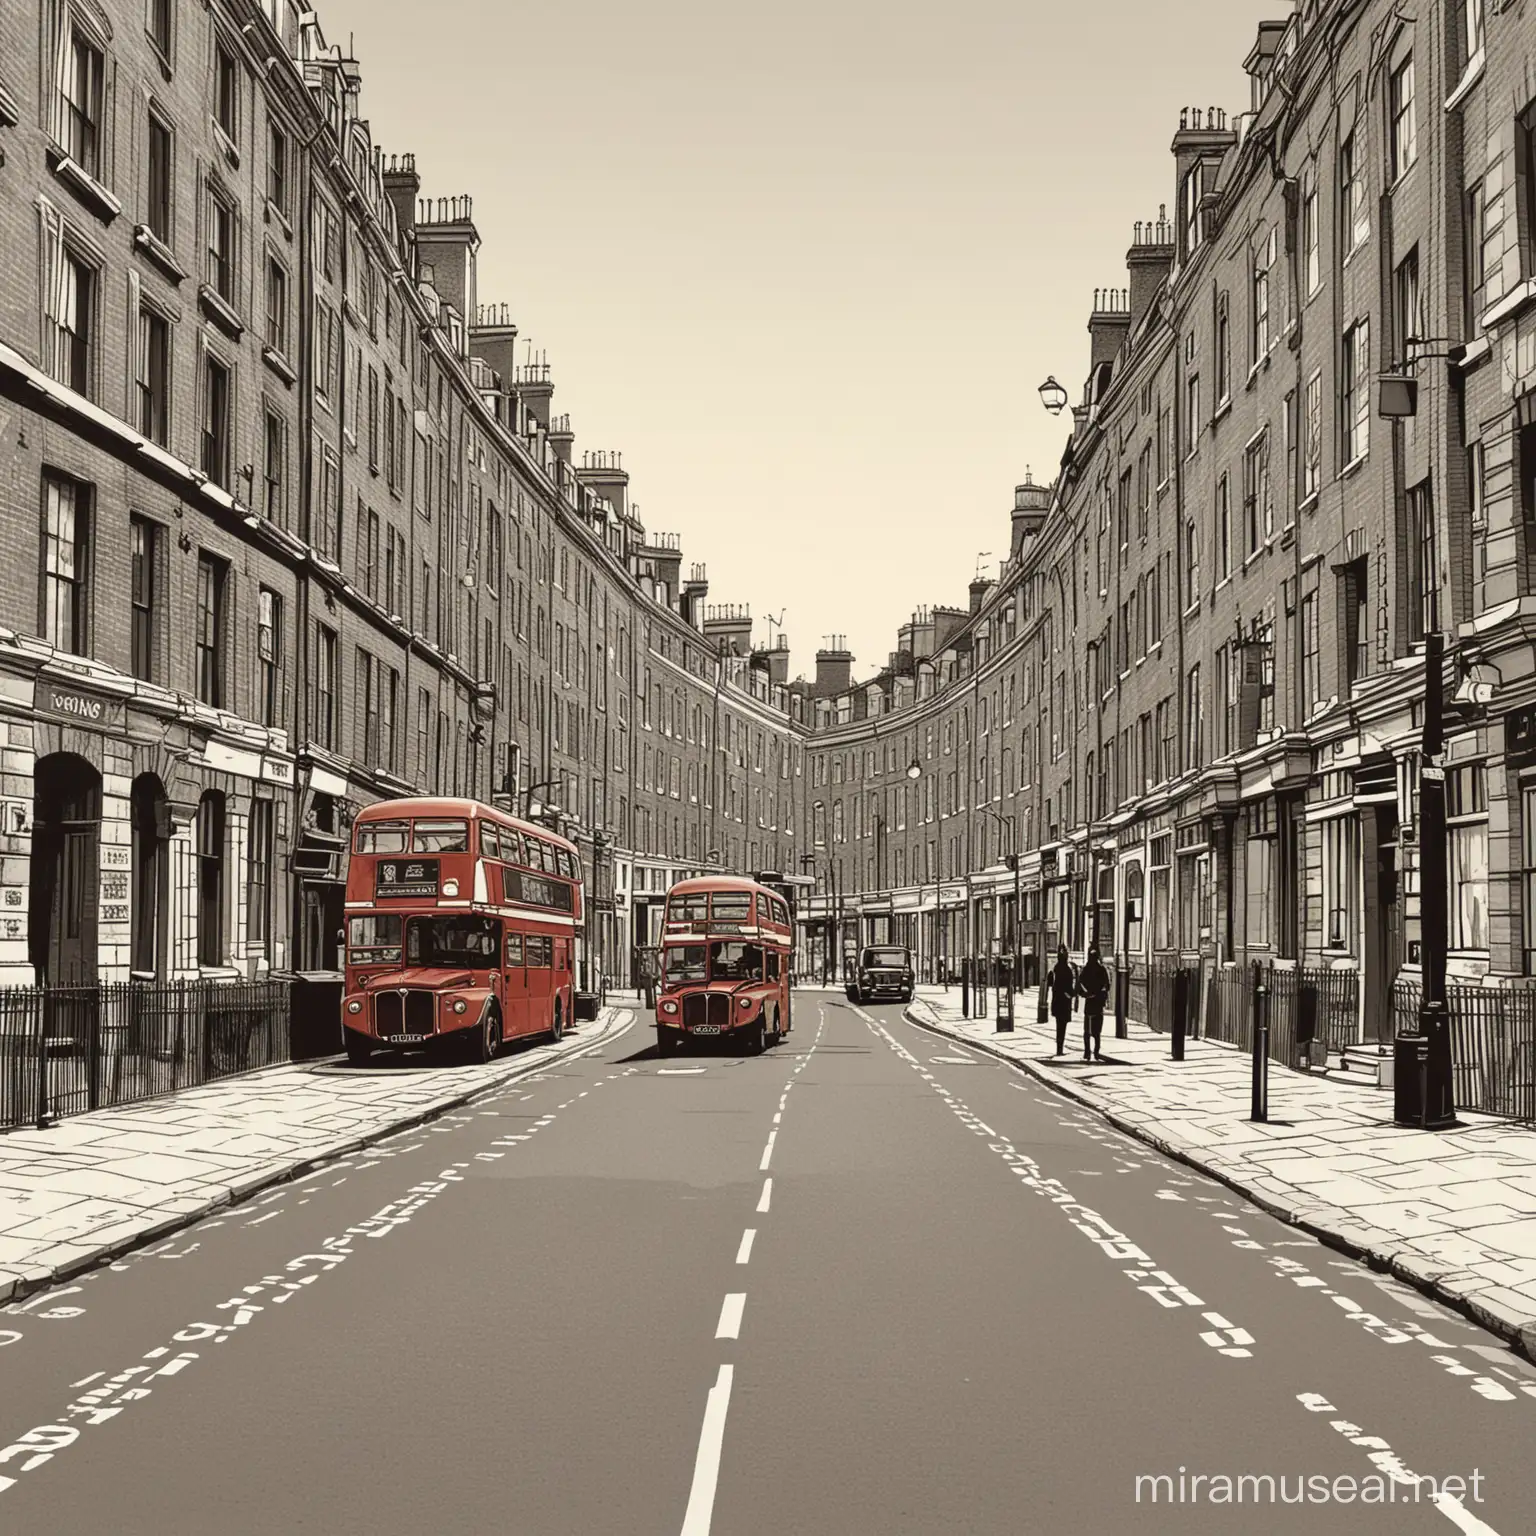 london street vector image

